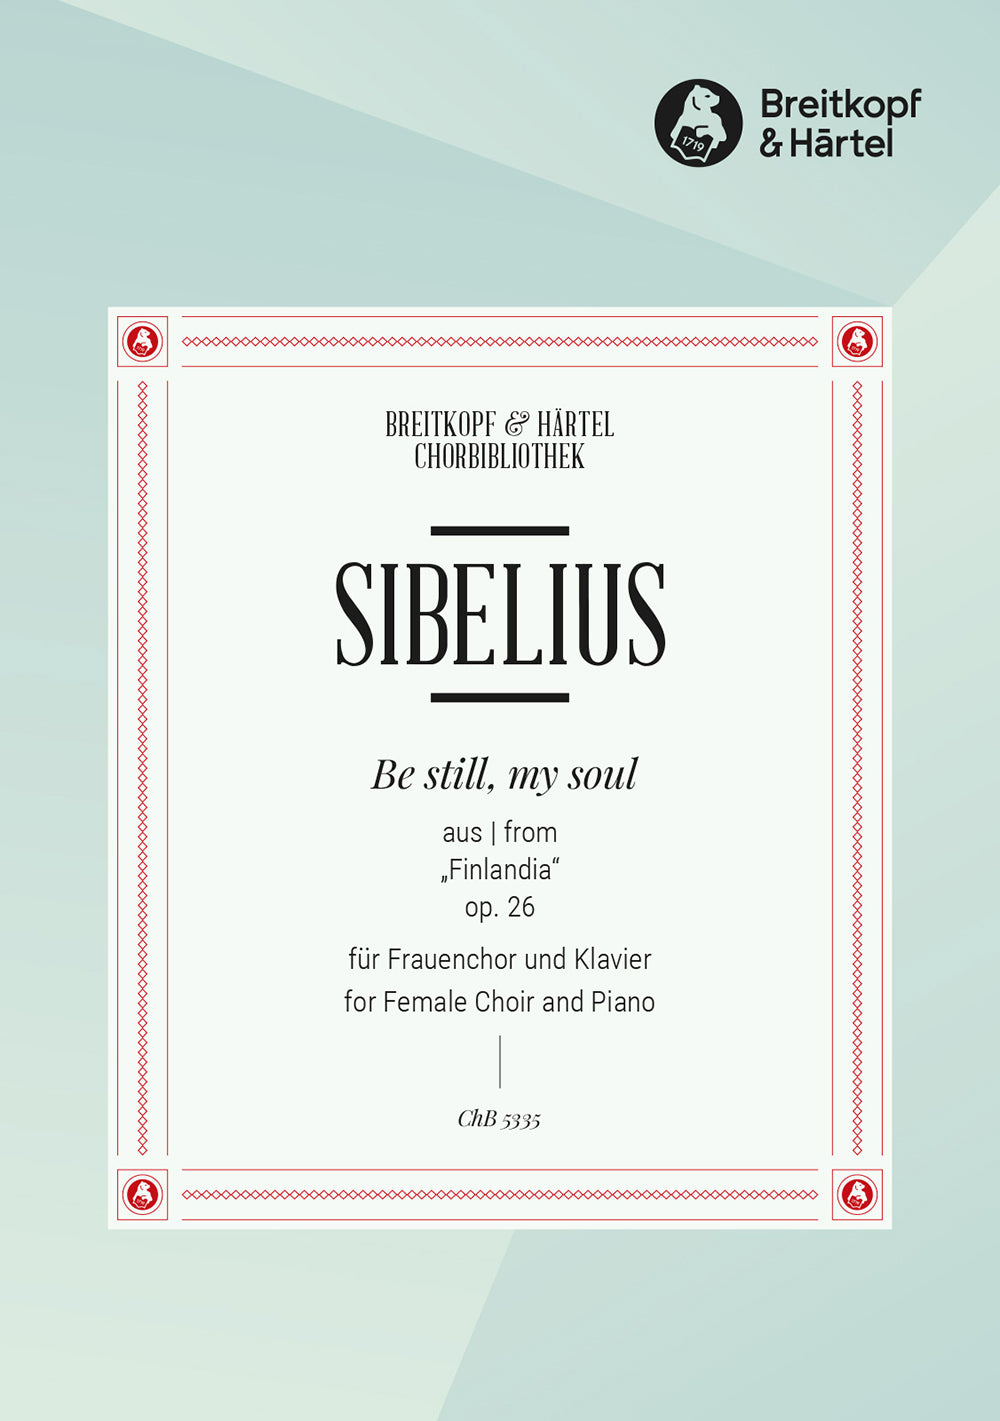 Sibelius: Be still, my soul (Finlandia Hymn) arr. for female choir & piano